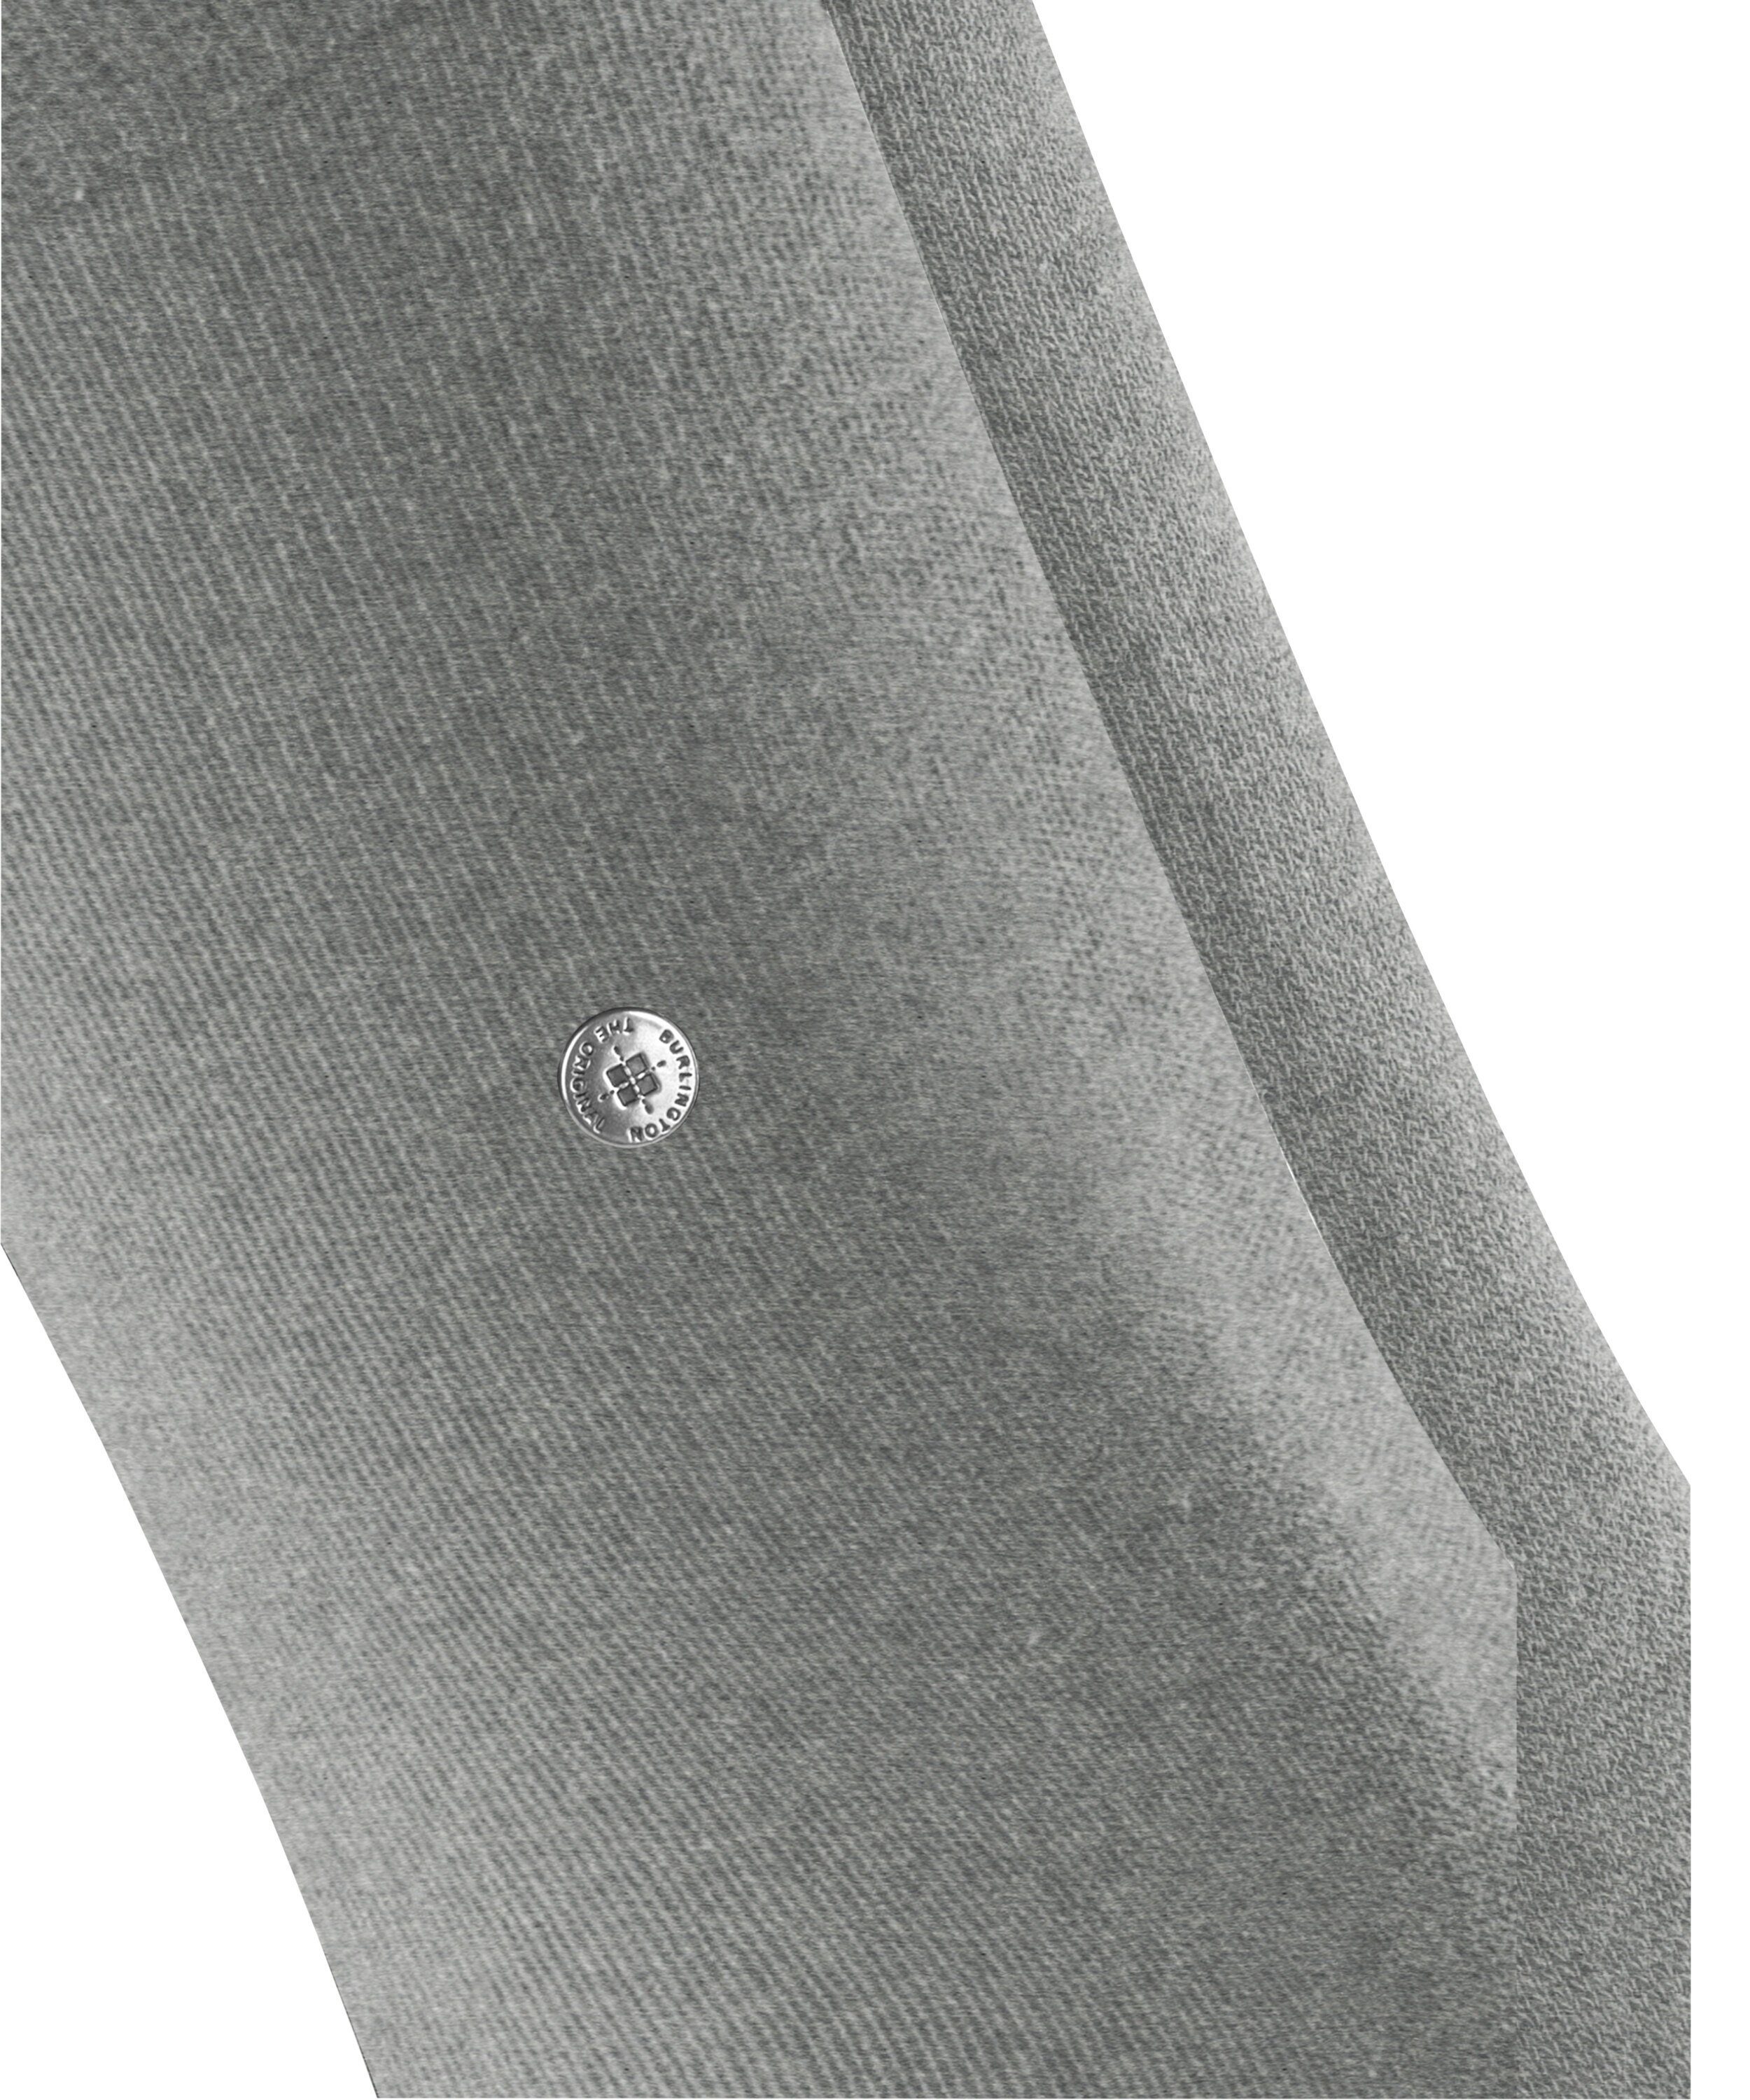 Burlington Socken Everyday (3401) (2-Paar) 2-Pack light grey